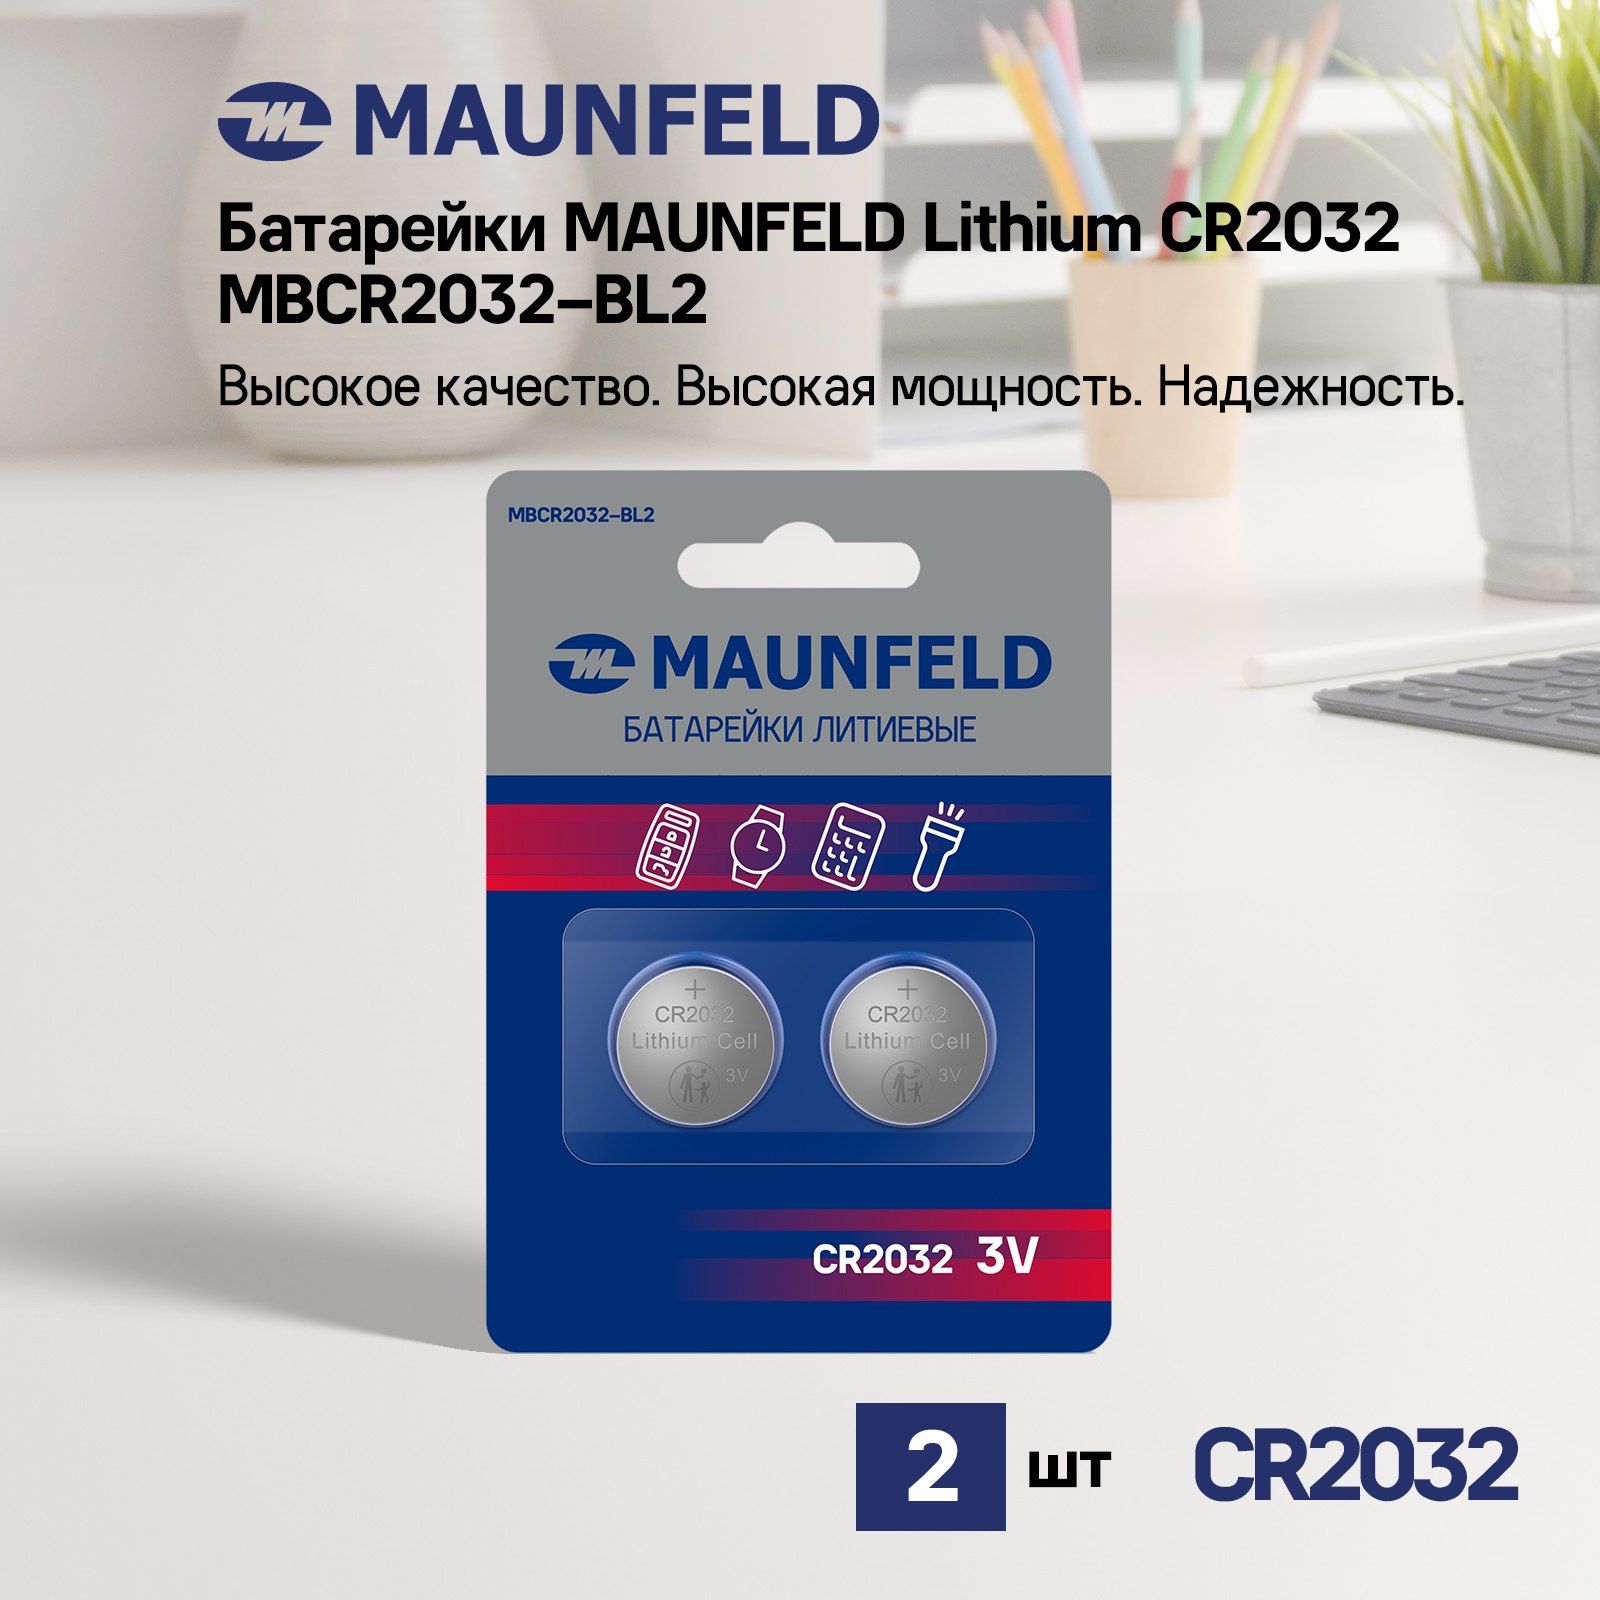 Батарейки MAUNFELD Lithium CR2032 MBCR2032-BL2, блистер 2 шт. батарейки energizer lithium cr2450 2 шт бл 7638900381795